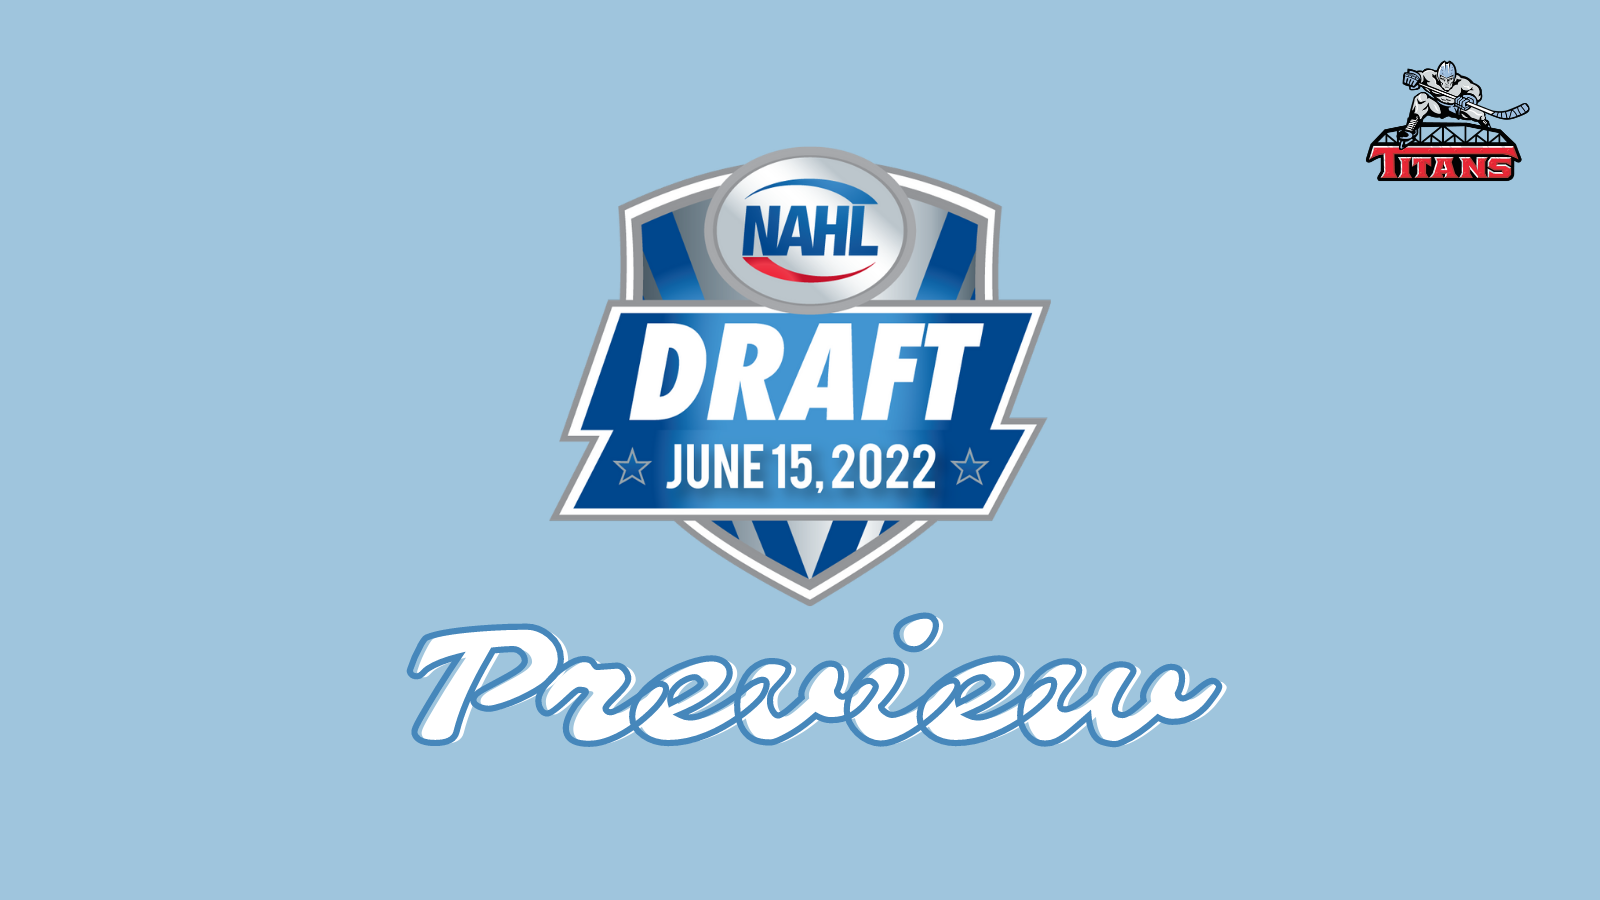 2022 NAHL Draft Preview: Titans have 7 picks